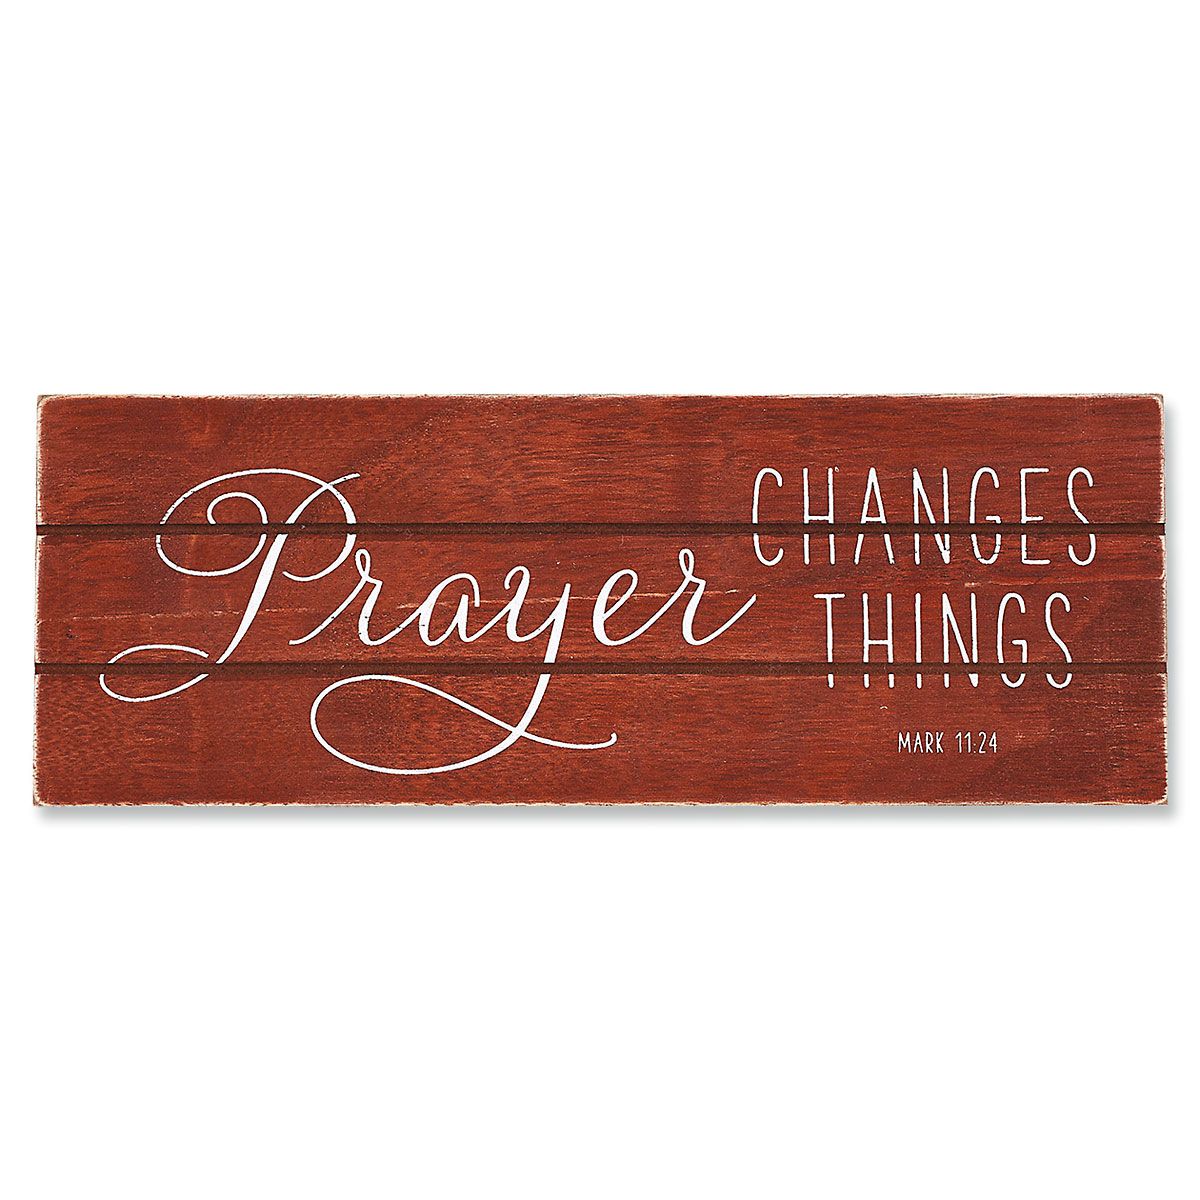 prayer changes things r kelly